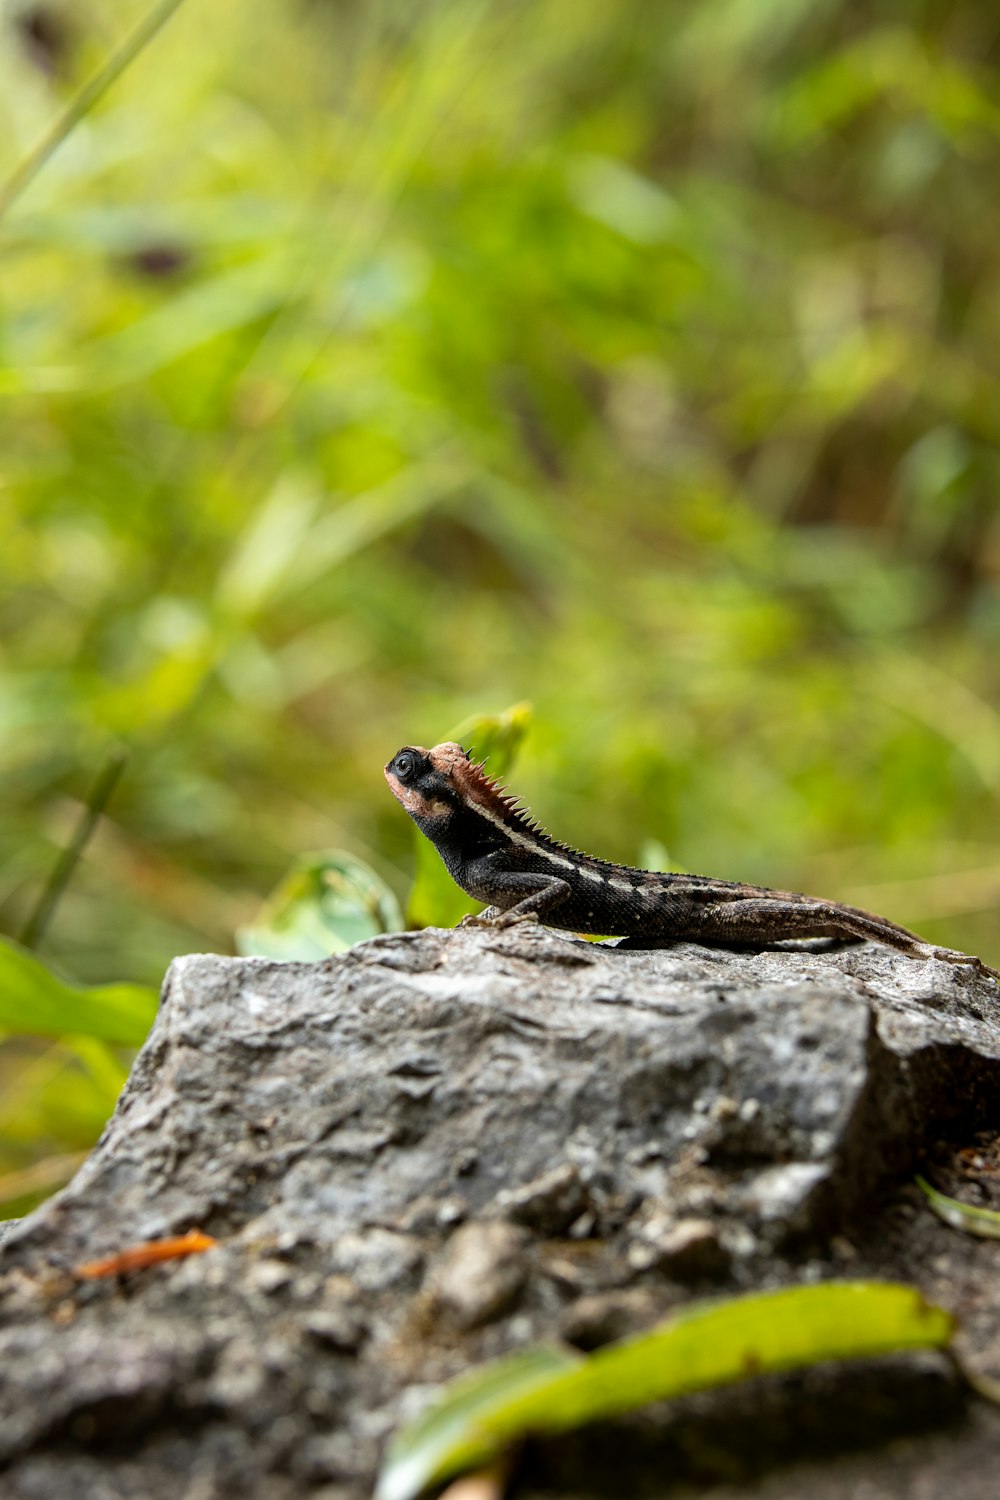 a lizard sitting on top of a tree stump